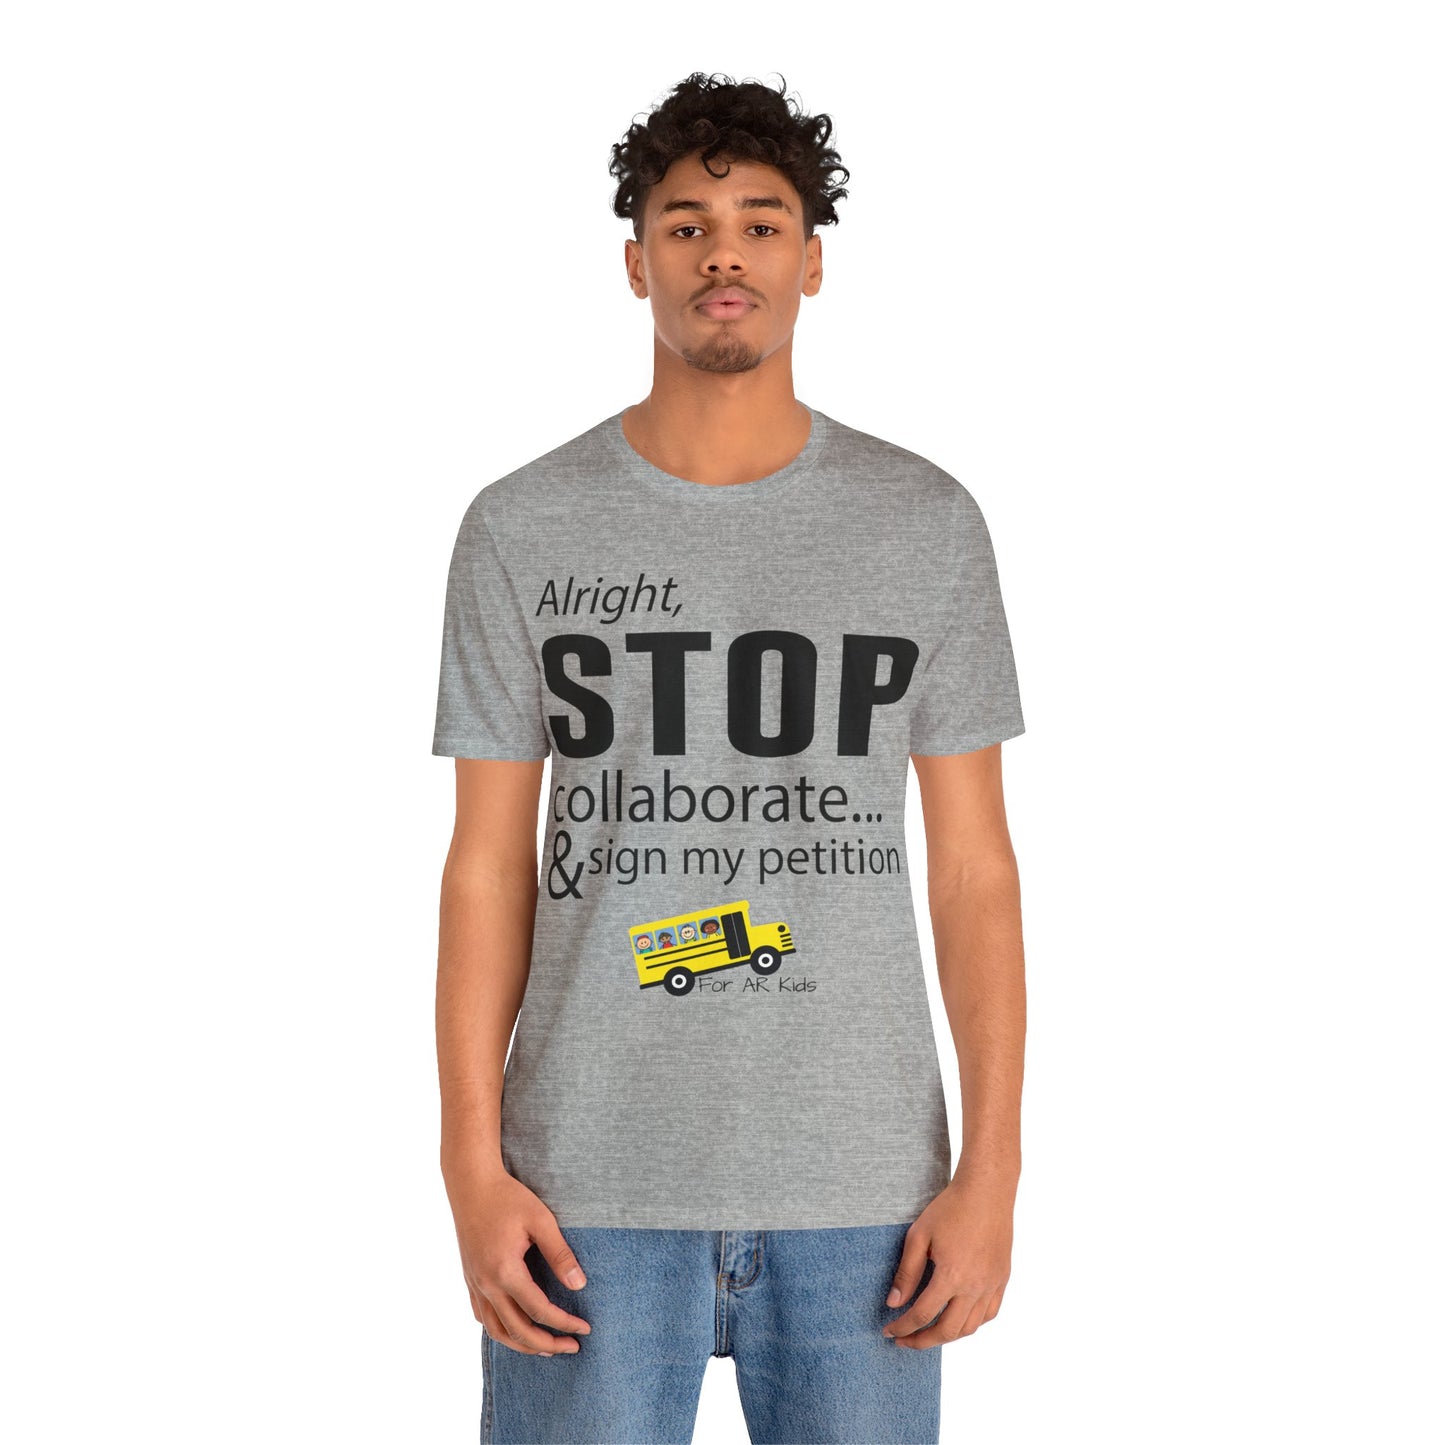 Alright Stop Collaborate and Sign My Petiton Shirt, AR Kids Shirt, School Bus Shirt